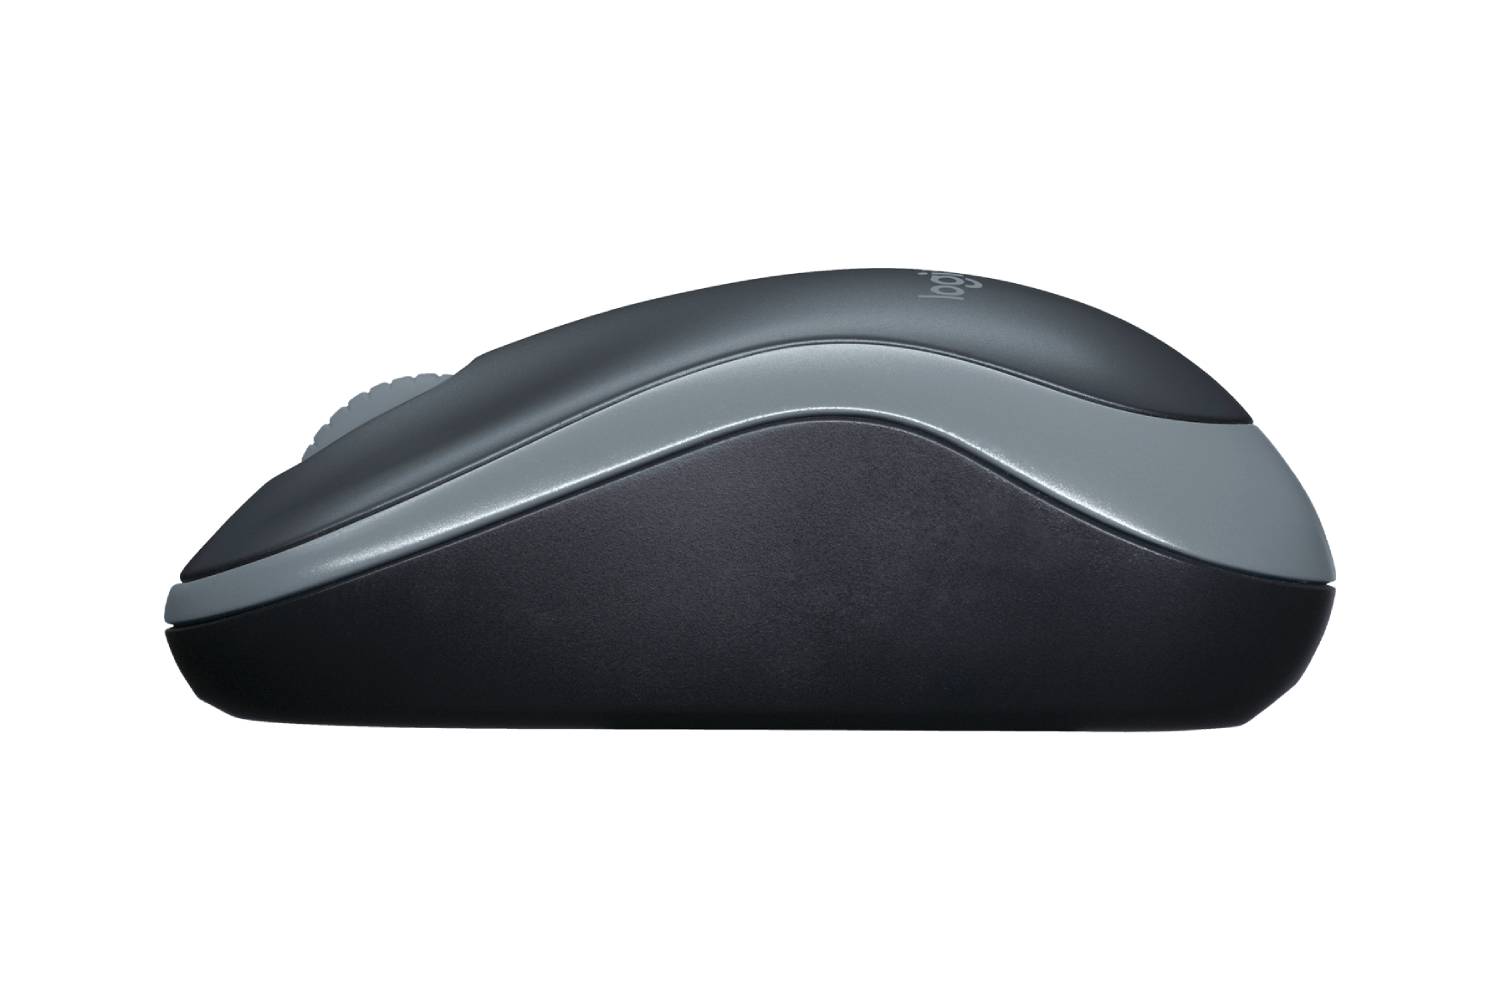 Logitech M185 Wireless Mouse Black/Grey-MOUSE-Logitech-computerspace